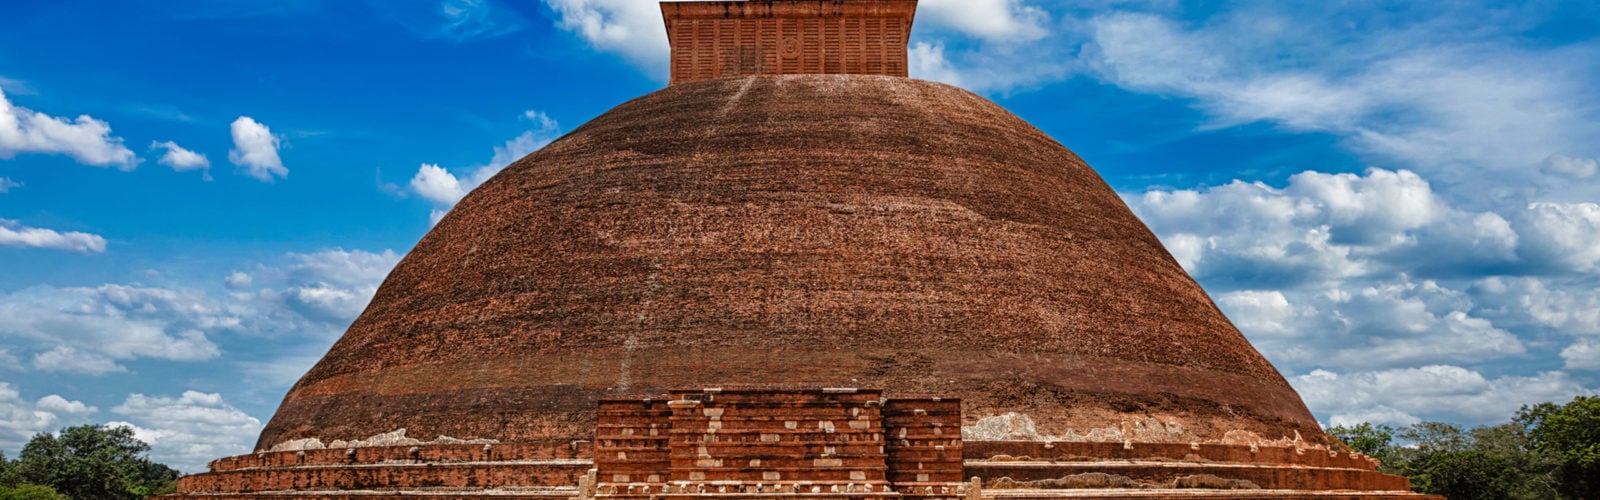 jetavaranama-stupa-sri-lanka